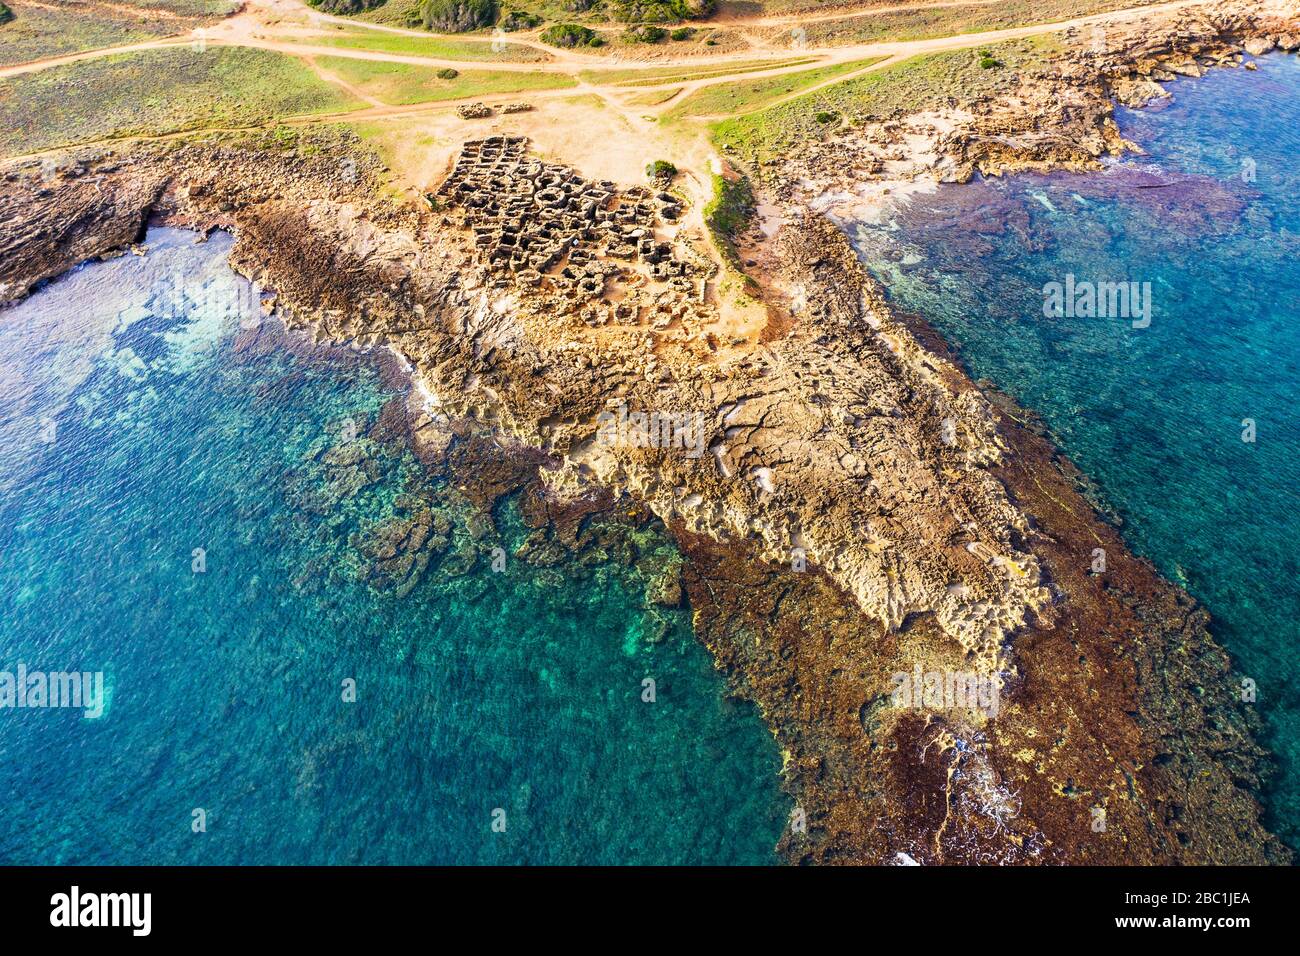 Nekropole von Son Real, Punta des Fenicis bei Can Picafort, Drohnenaufnahme, Mallorca, Balearen, Spanien Foto Stock